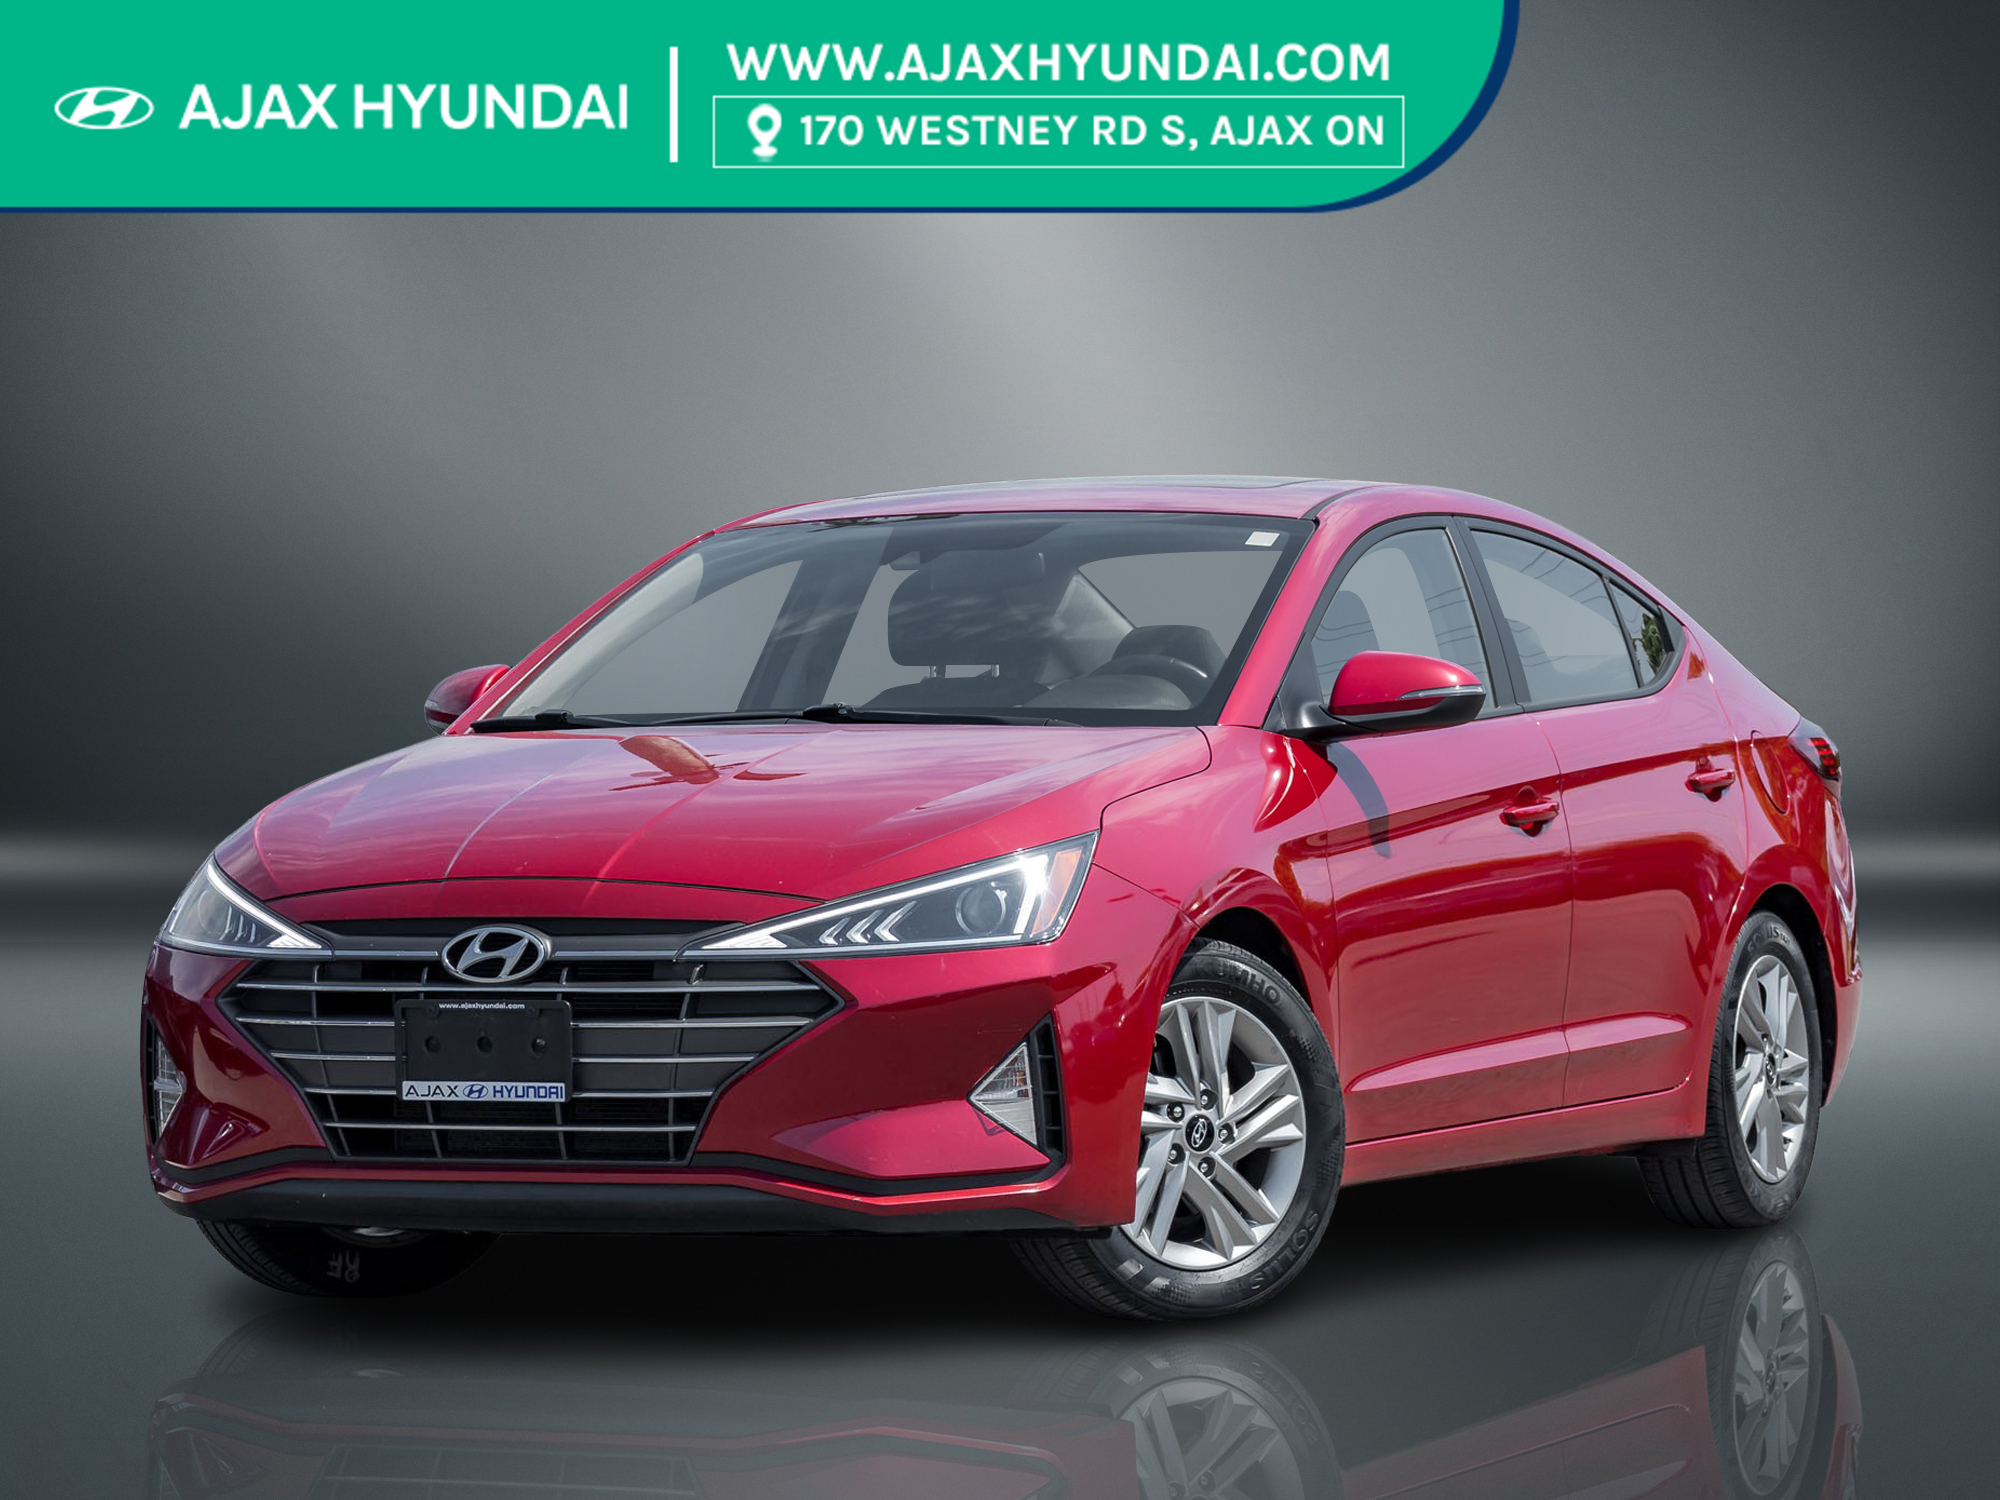 2020 Hyundai Elantra Preferred PREFERRED | RATES FROM 4.99% PREFERRED |